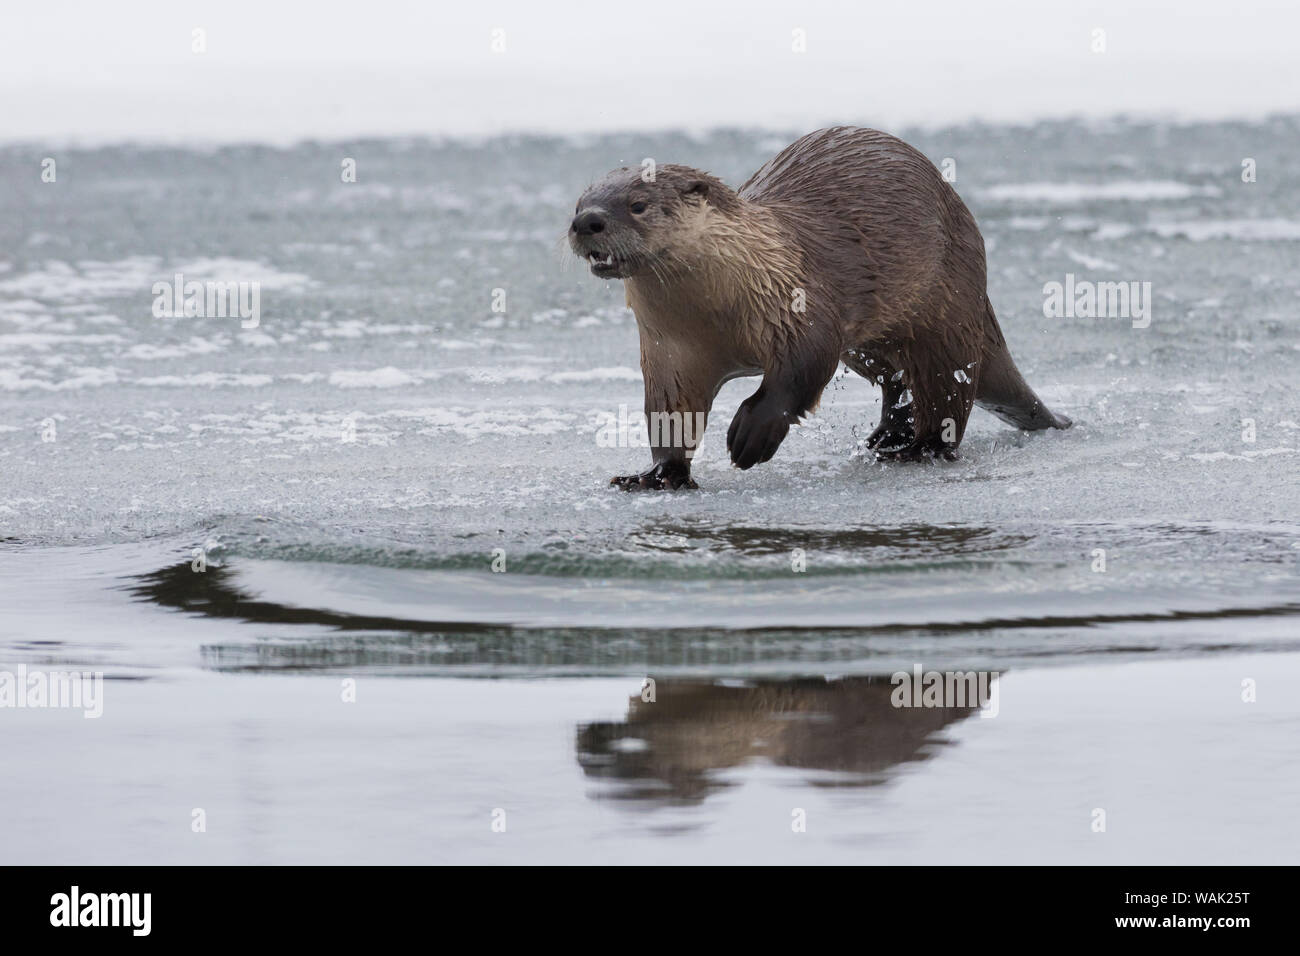 River otter preparing to dive into river Stock Photo